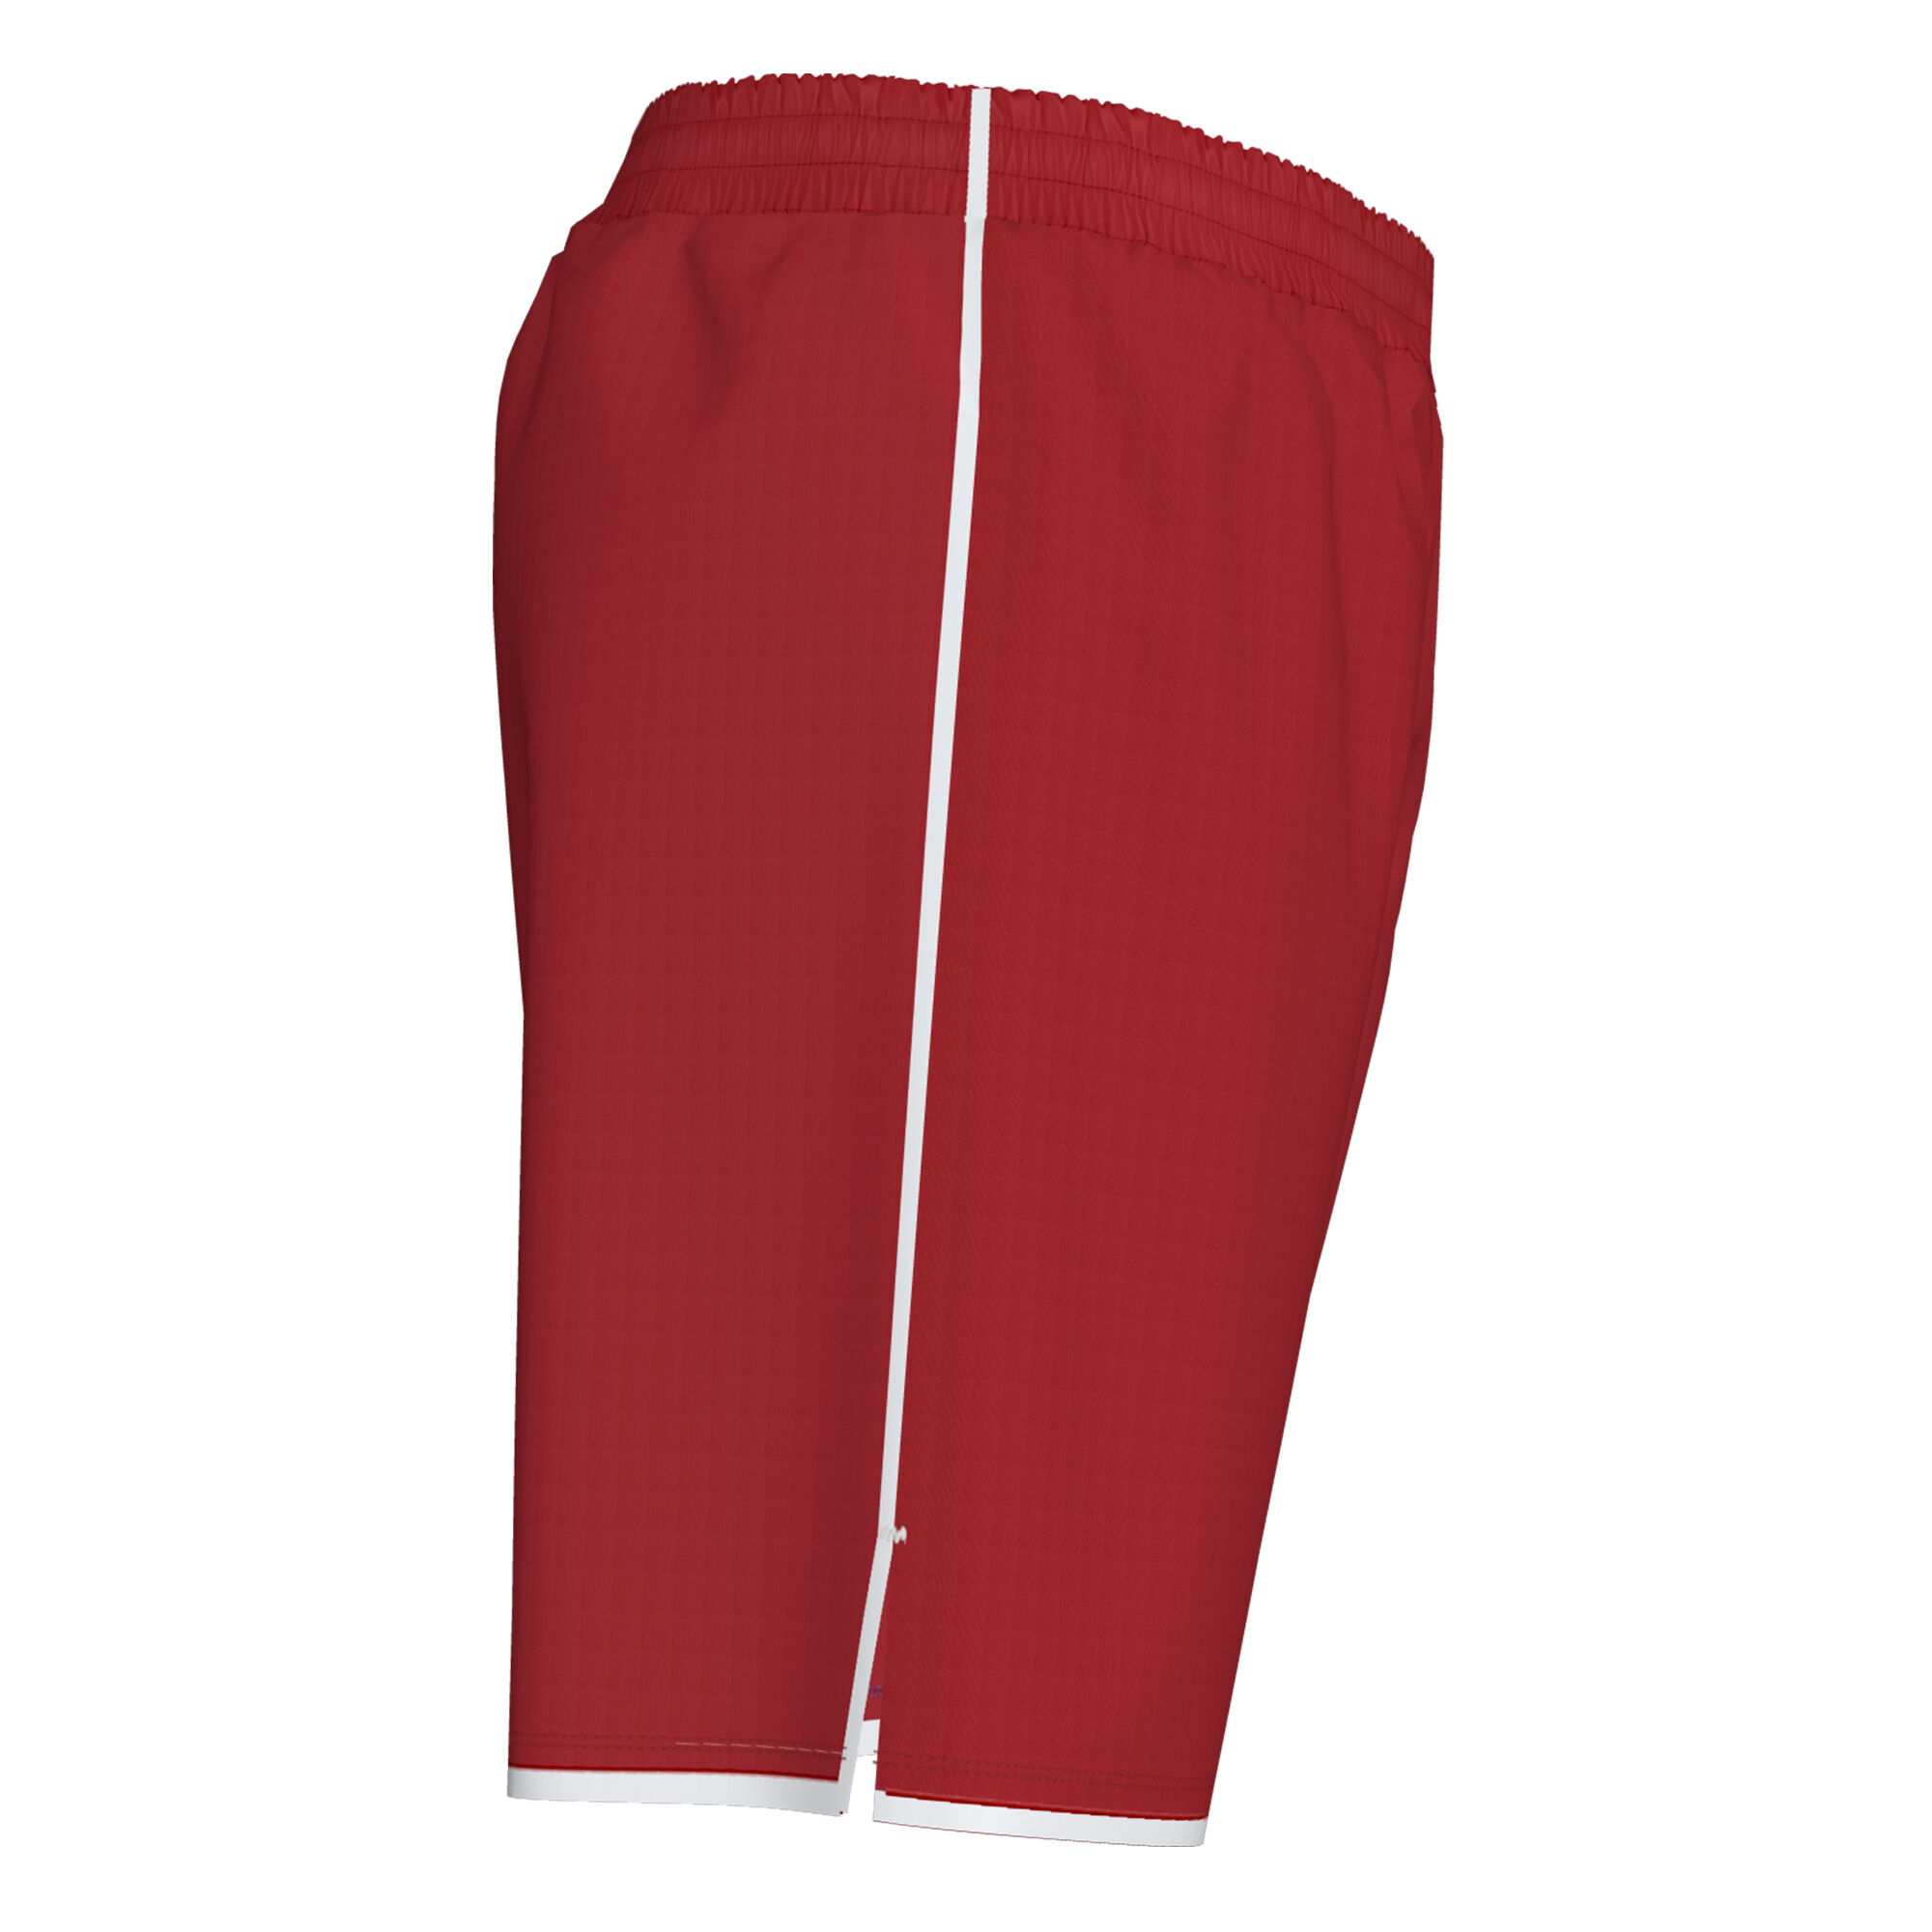 Joma Liga, pantalones cortos para hombre, Blanco / rojo